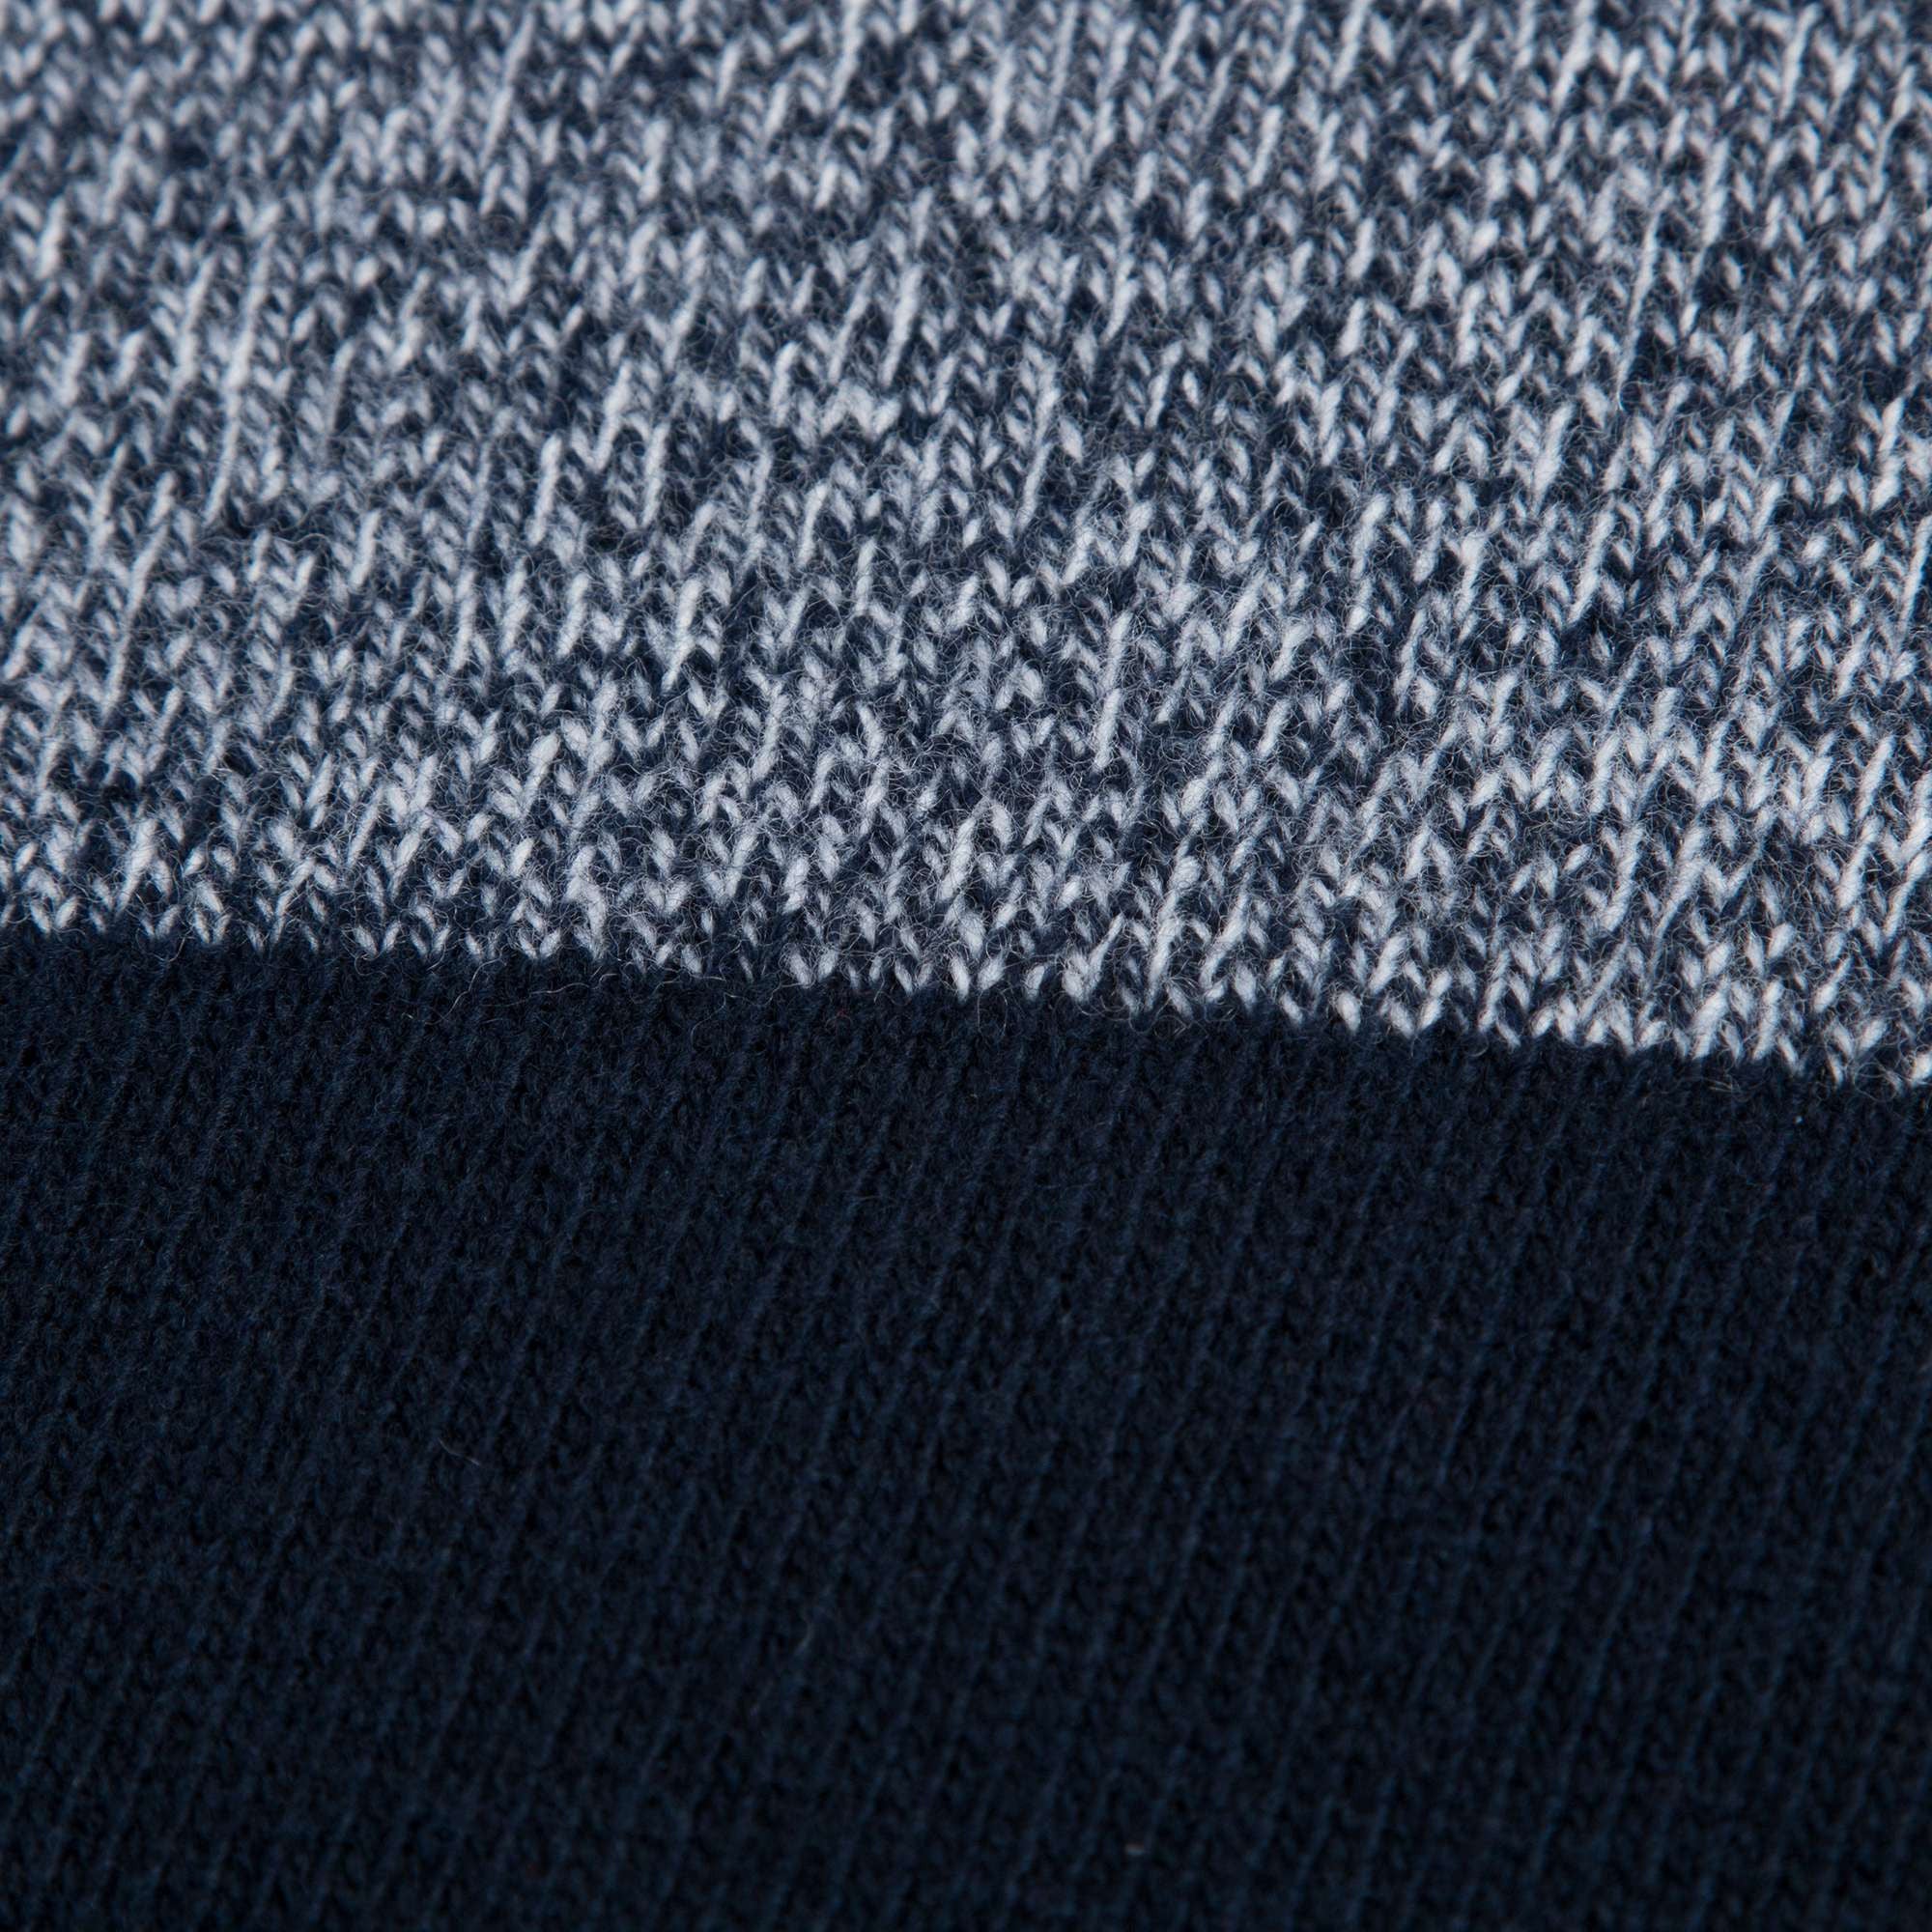 Boys Blue & Grey Wool Knitted Sweater